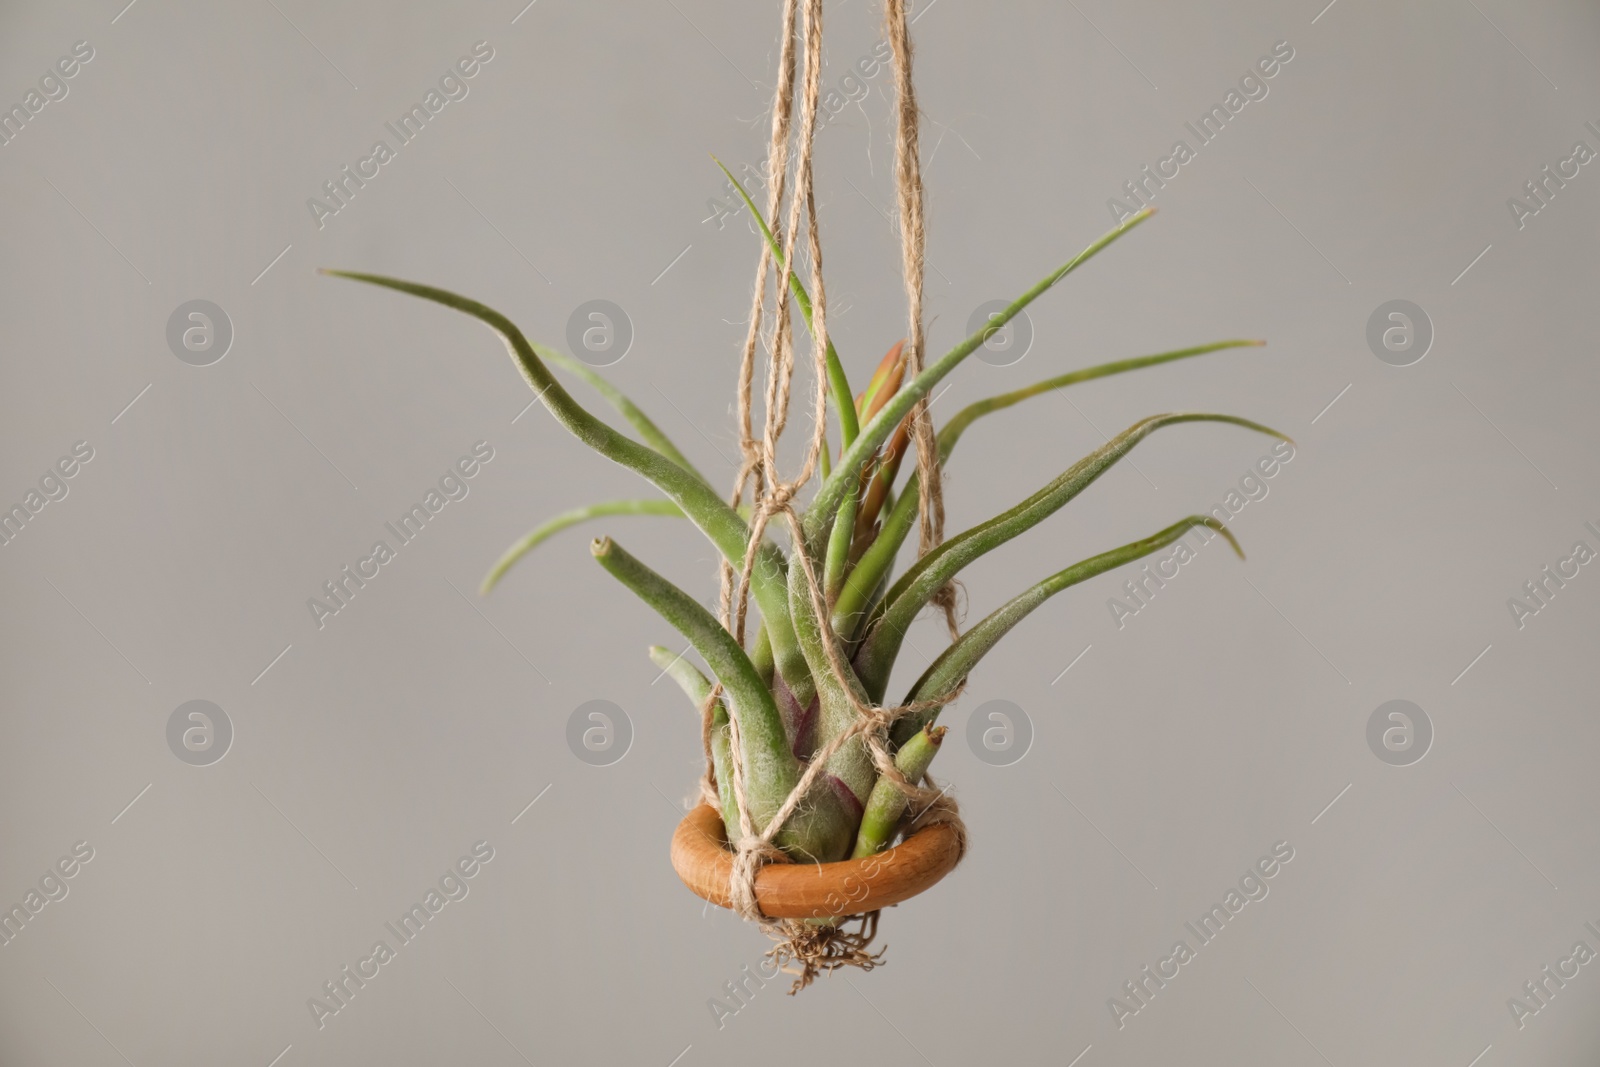 Photo of Tillandsia plant hanging on grey background. House decor